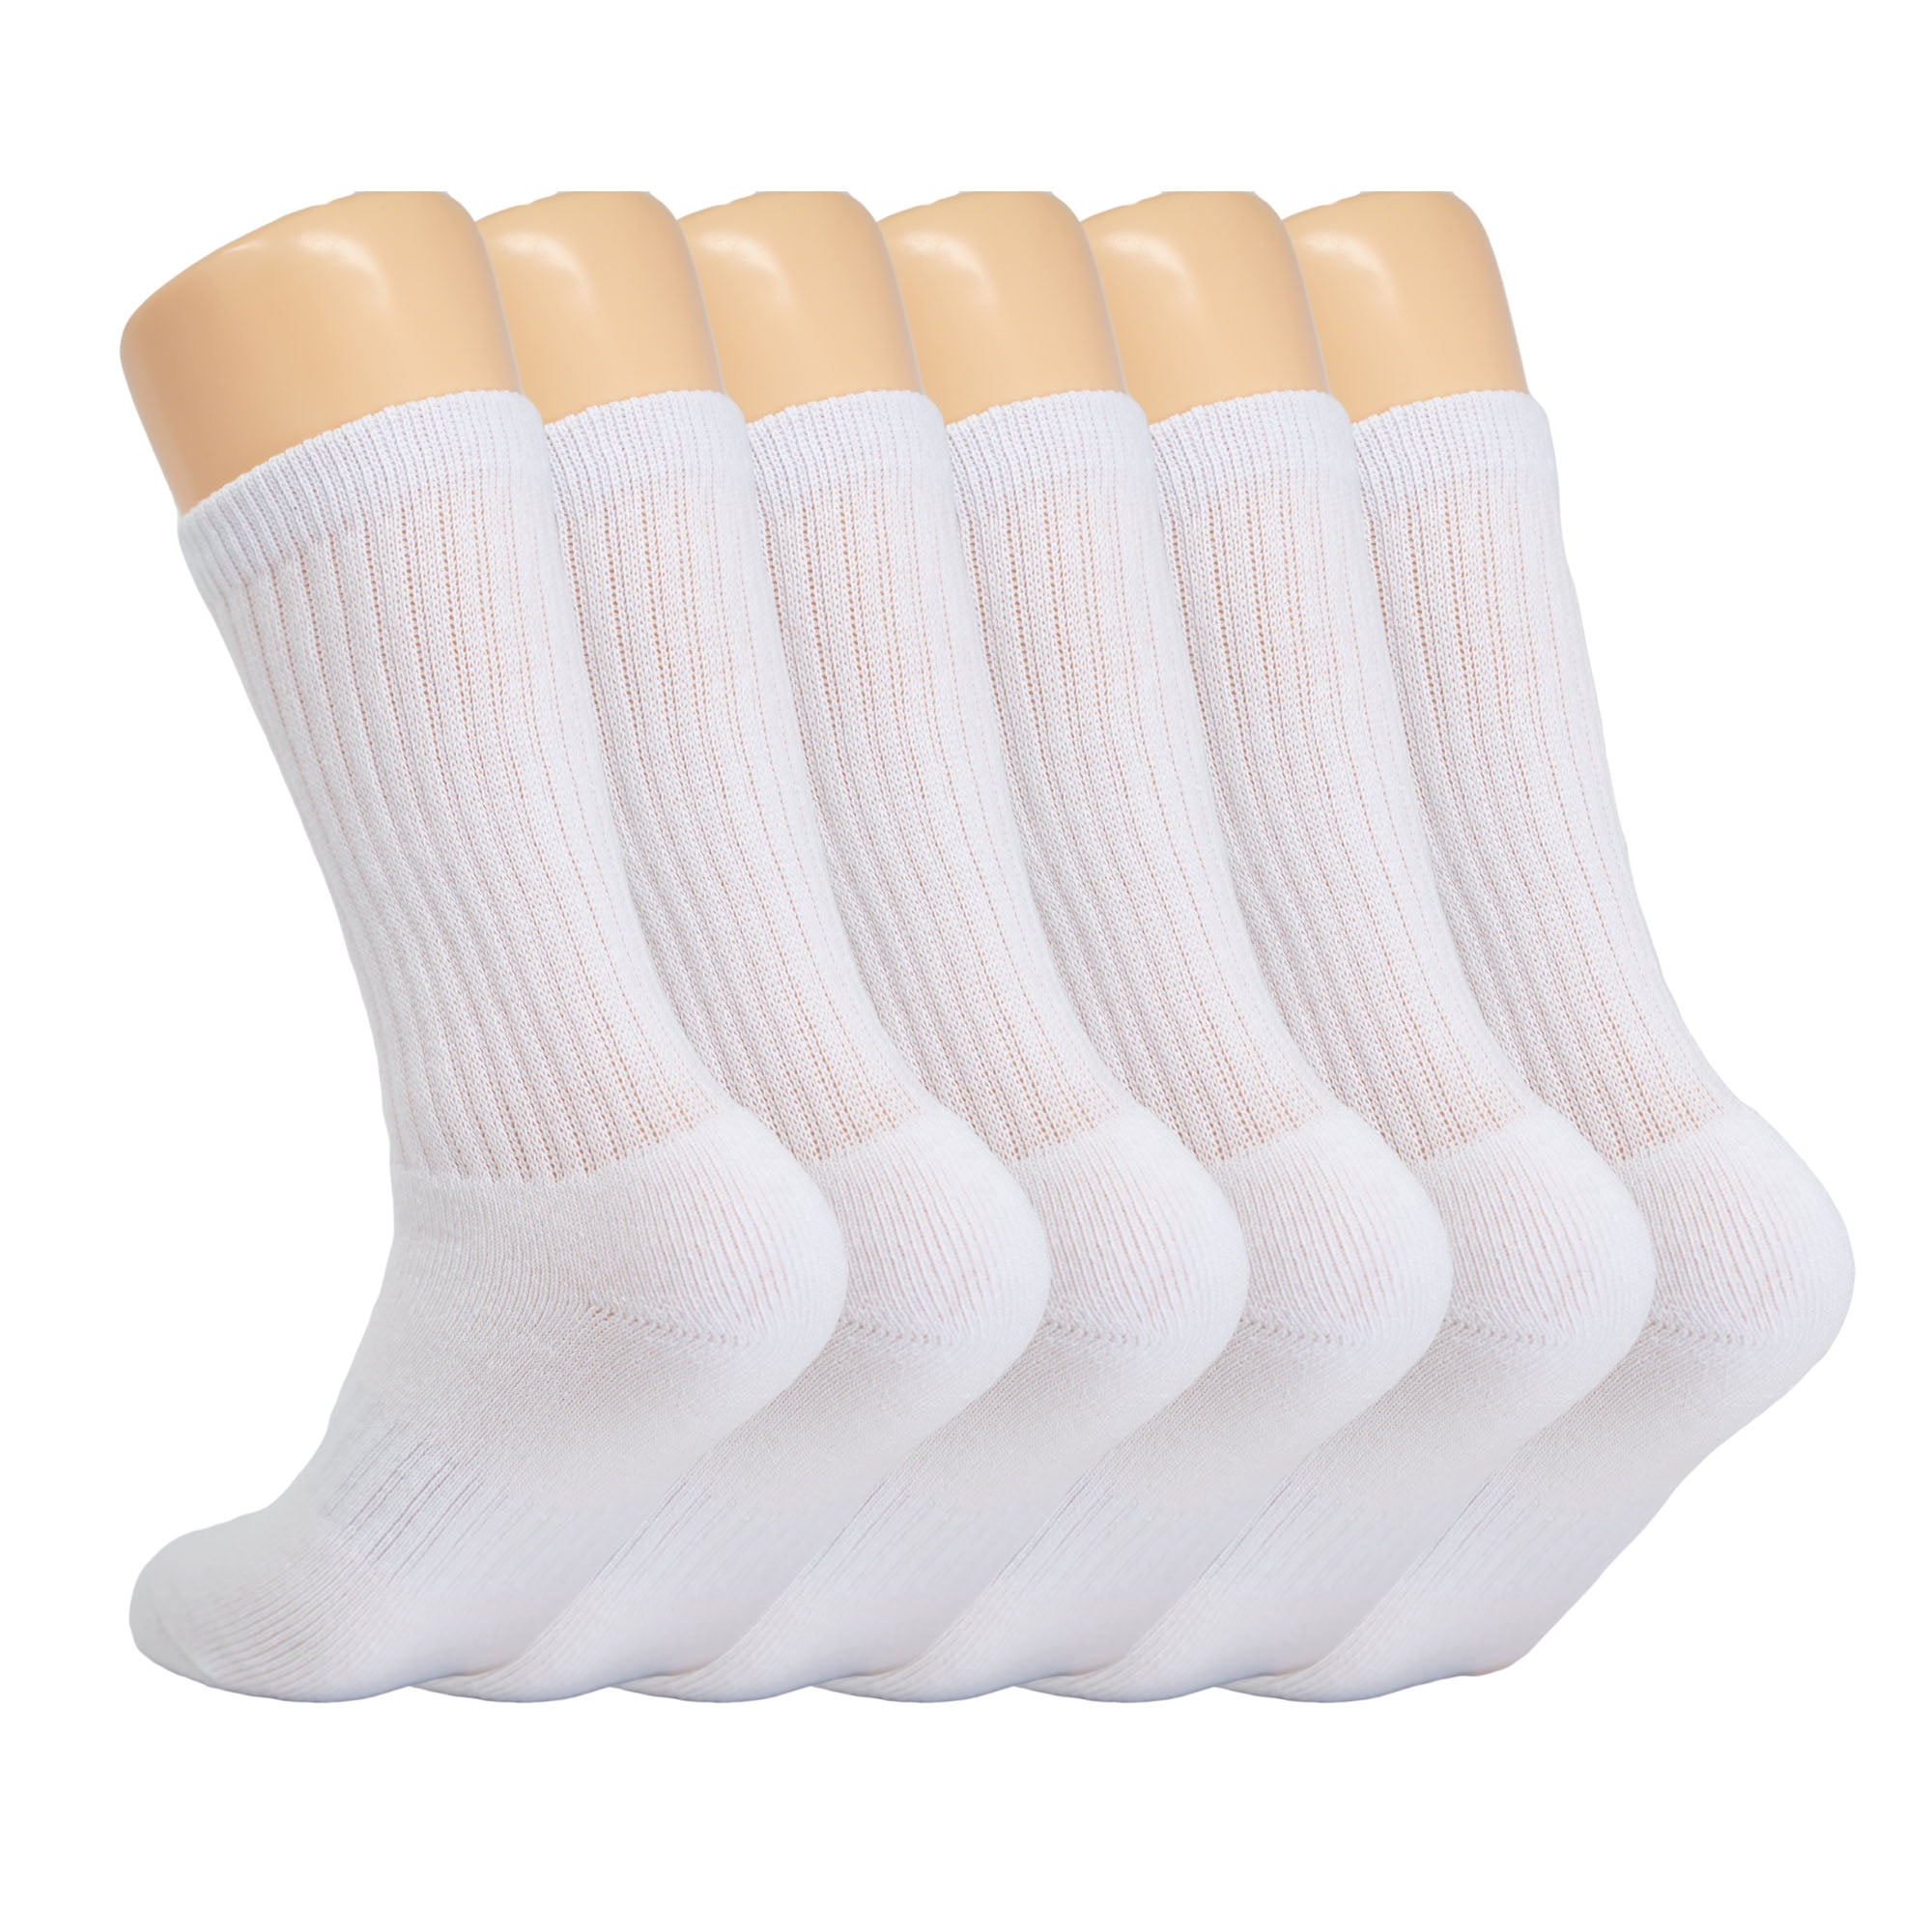 6-12 Pairs Fashion Cotton Women Girls Ankle School Casual Socks Size 9-11 white 